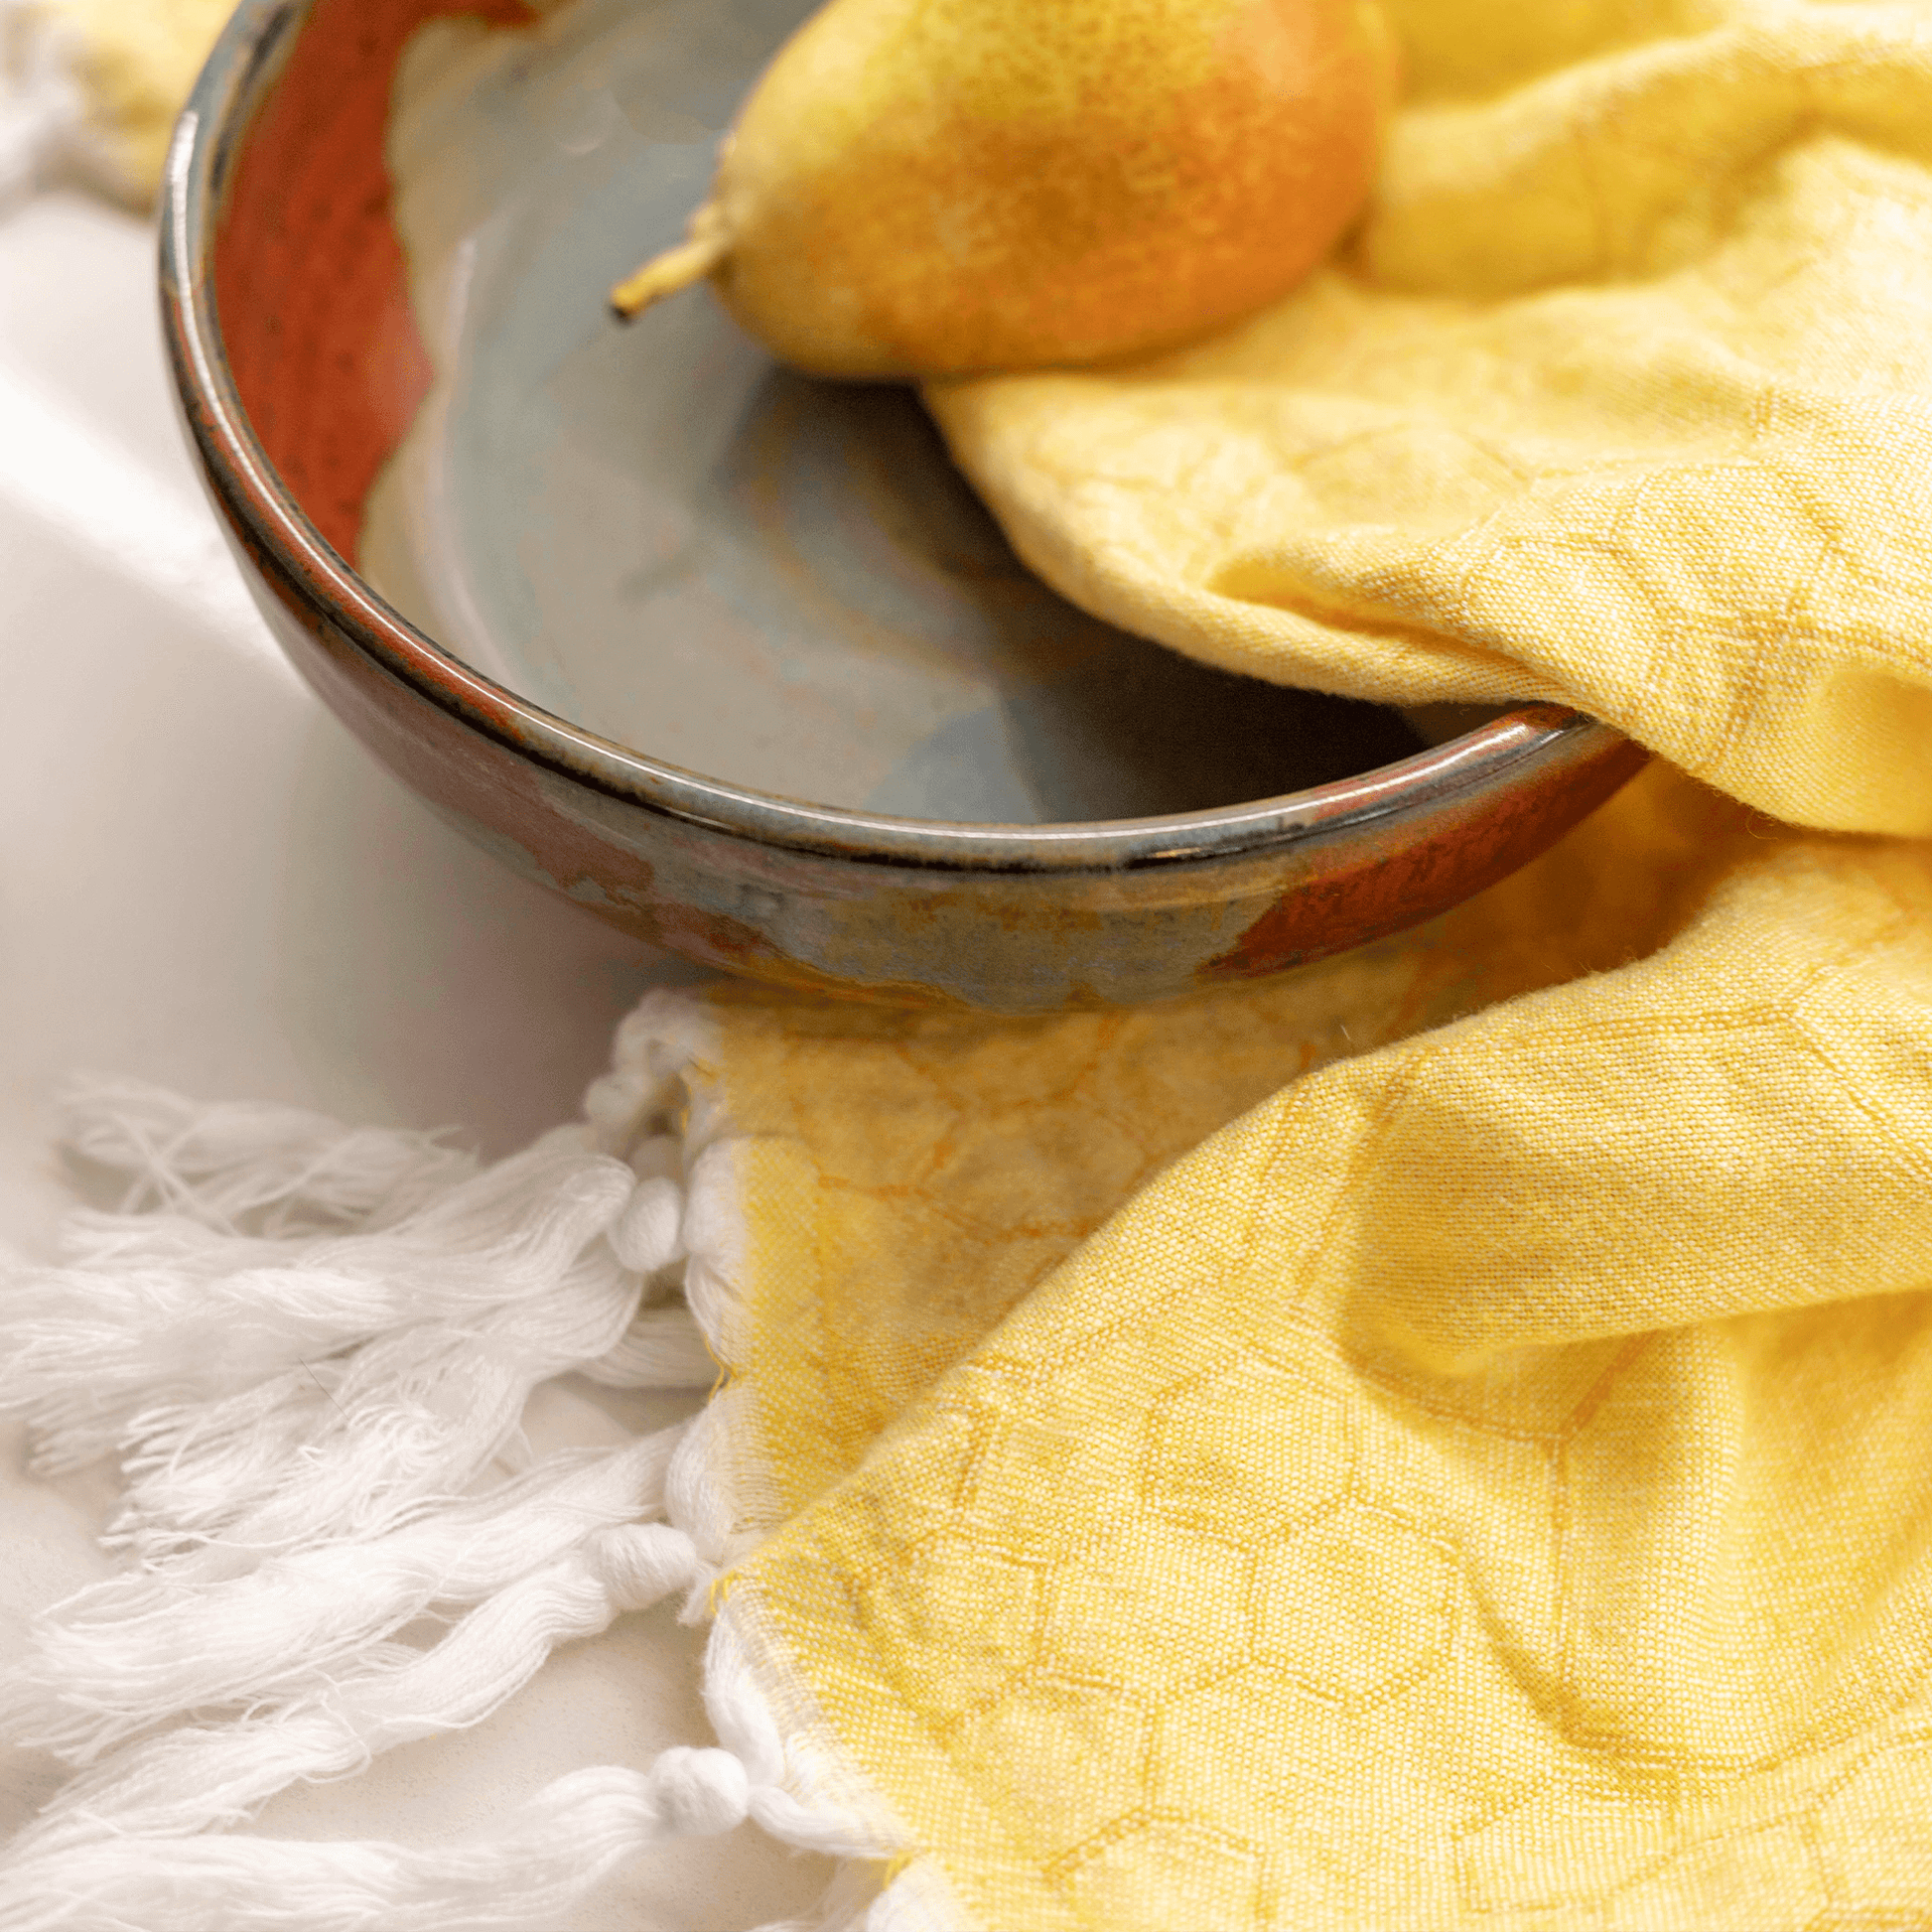 Yellow and orange Turkish towel in the kitchen